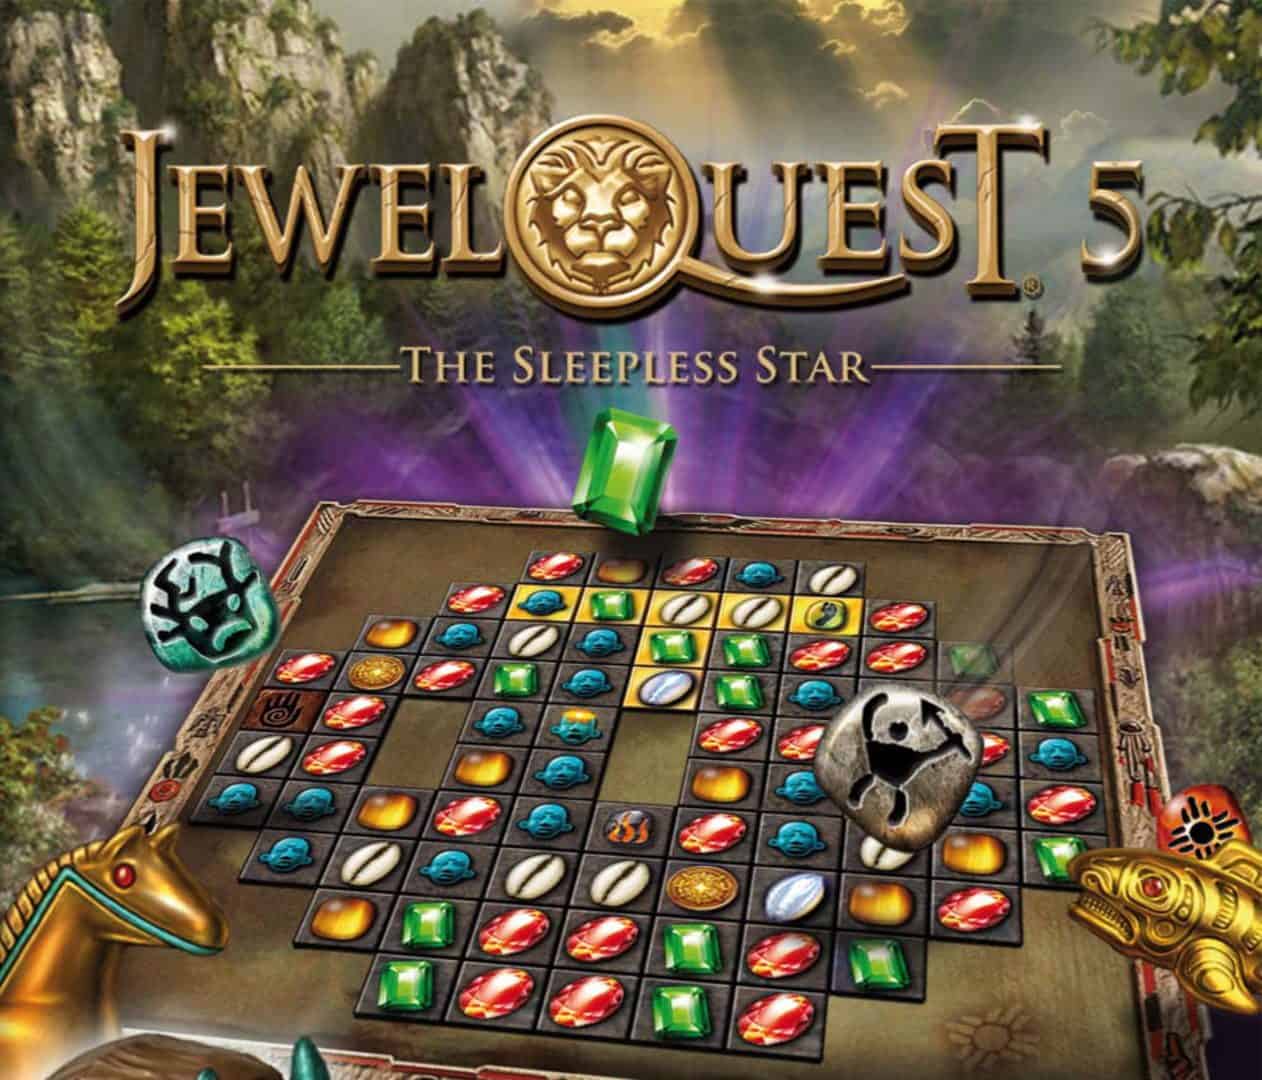 Jewel Quest 5: The Sleepless Star